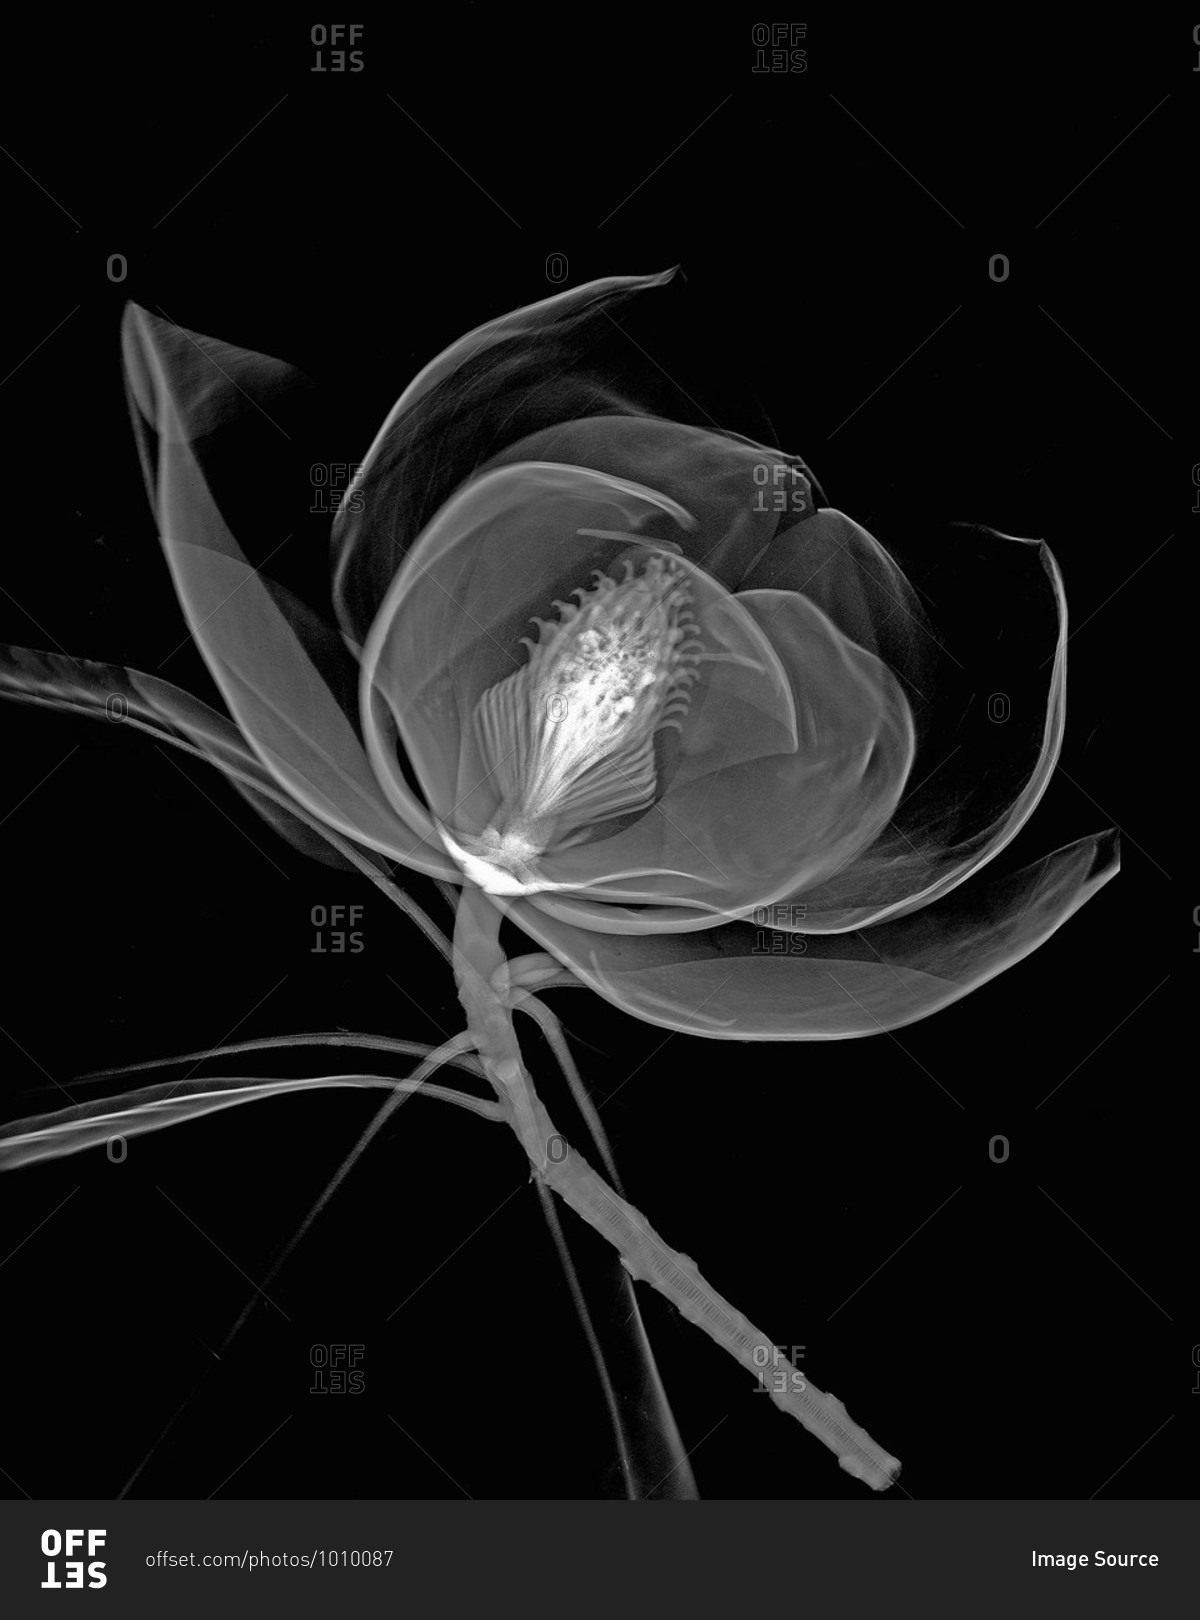 Inverted image of magnolia flower